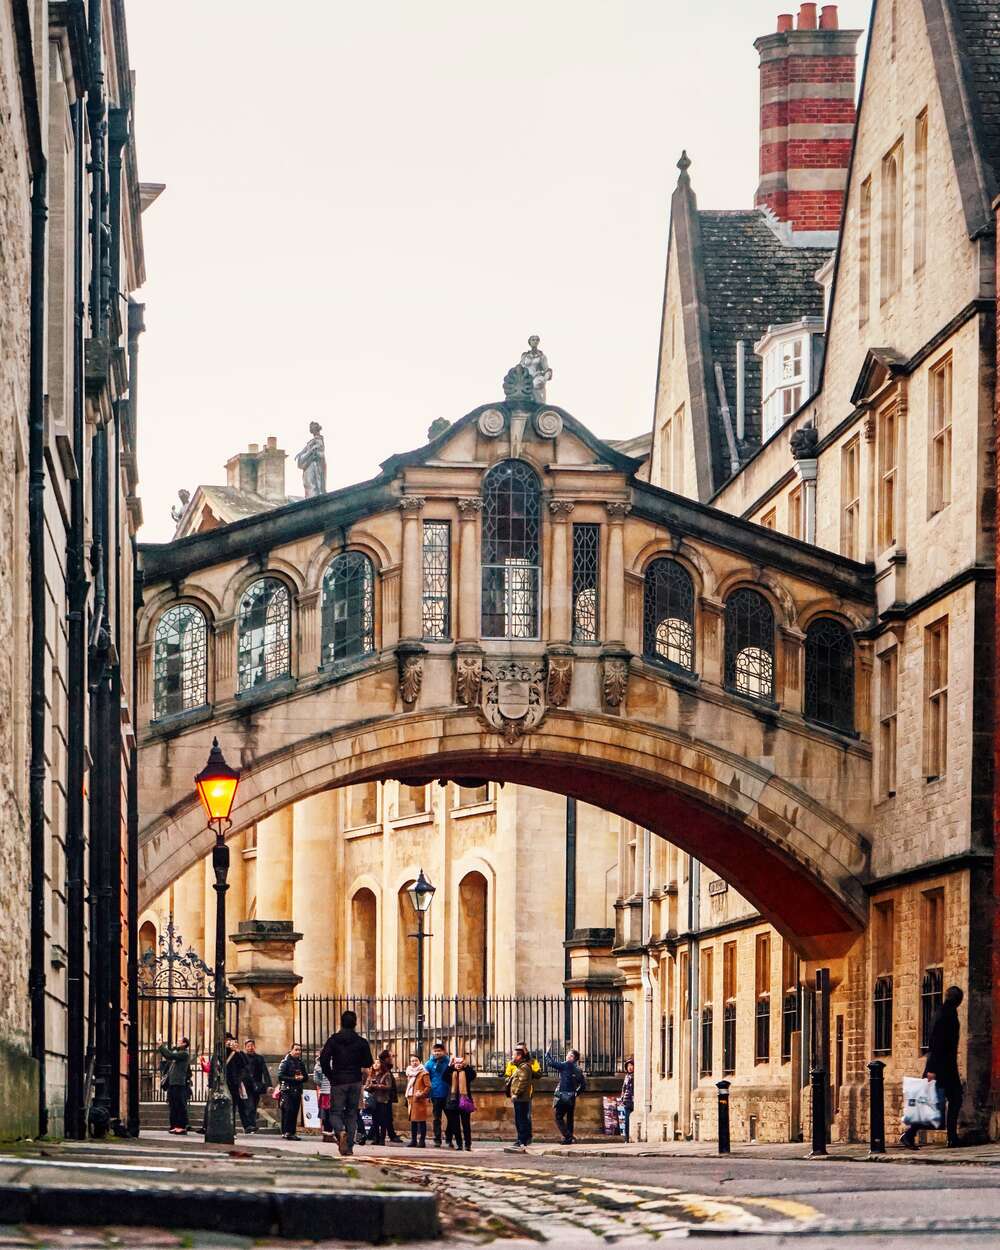 Bridge of Sighs, Oxford, England